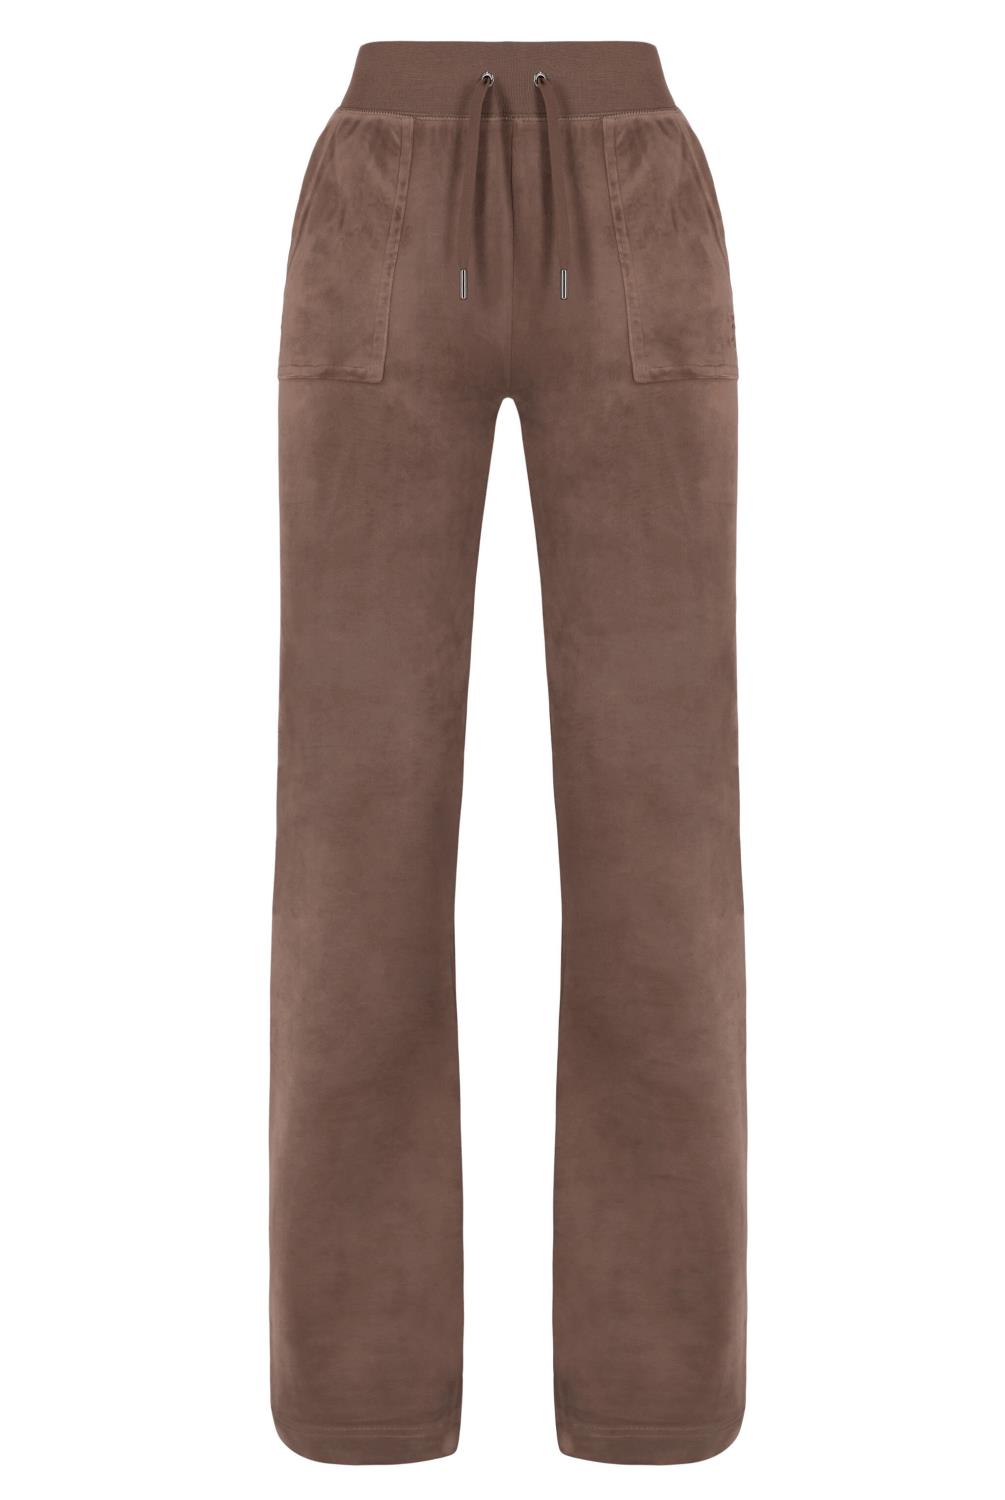 Del Ray Classic velour pant pocket design Acorn - Juicy Couture